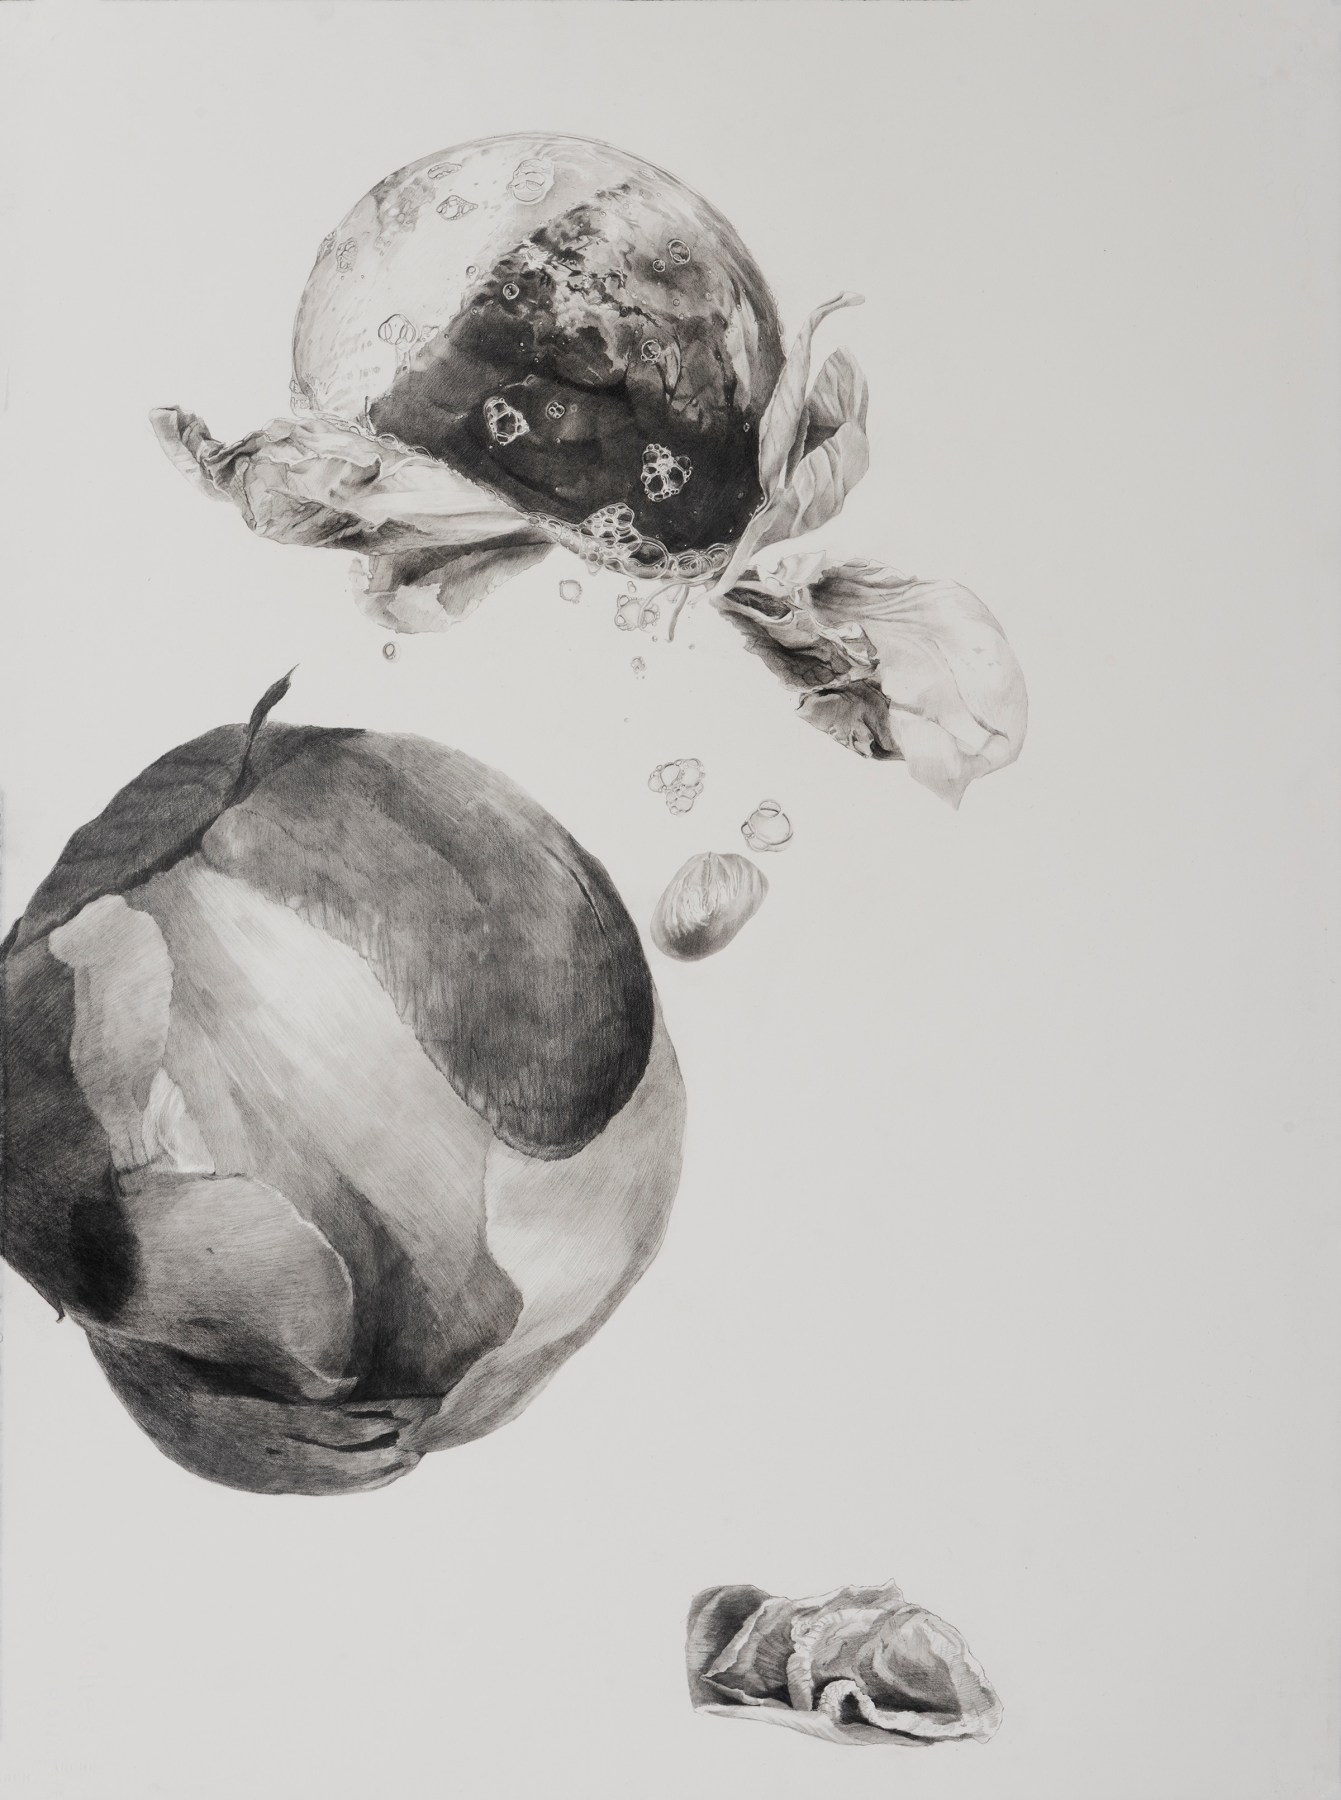 Dead Flowers 3, graphite on paper, 30 x 22 1/2 in, JR039